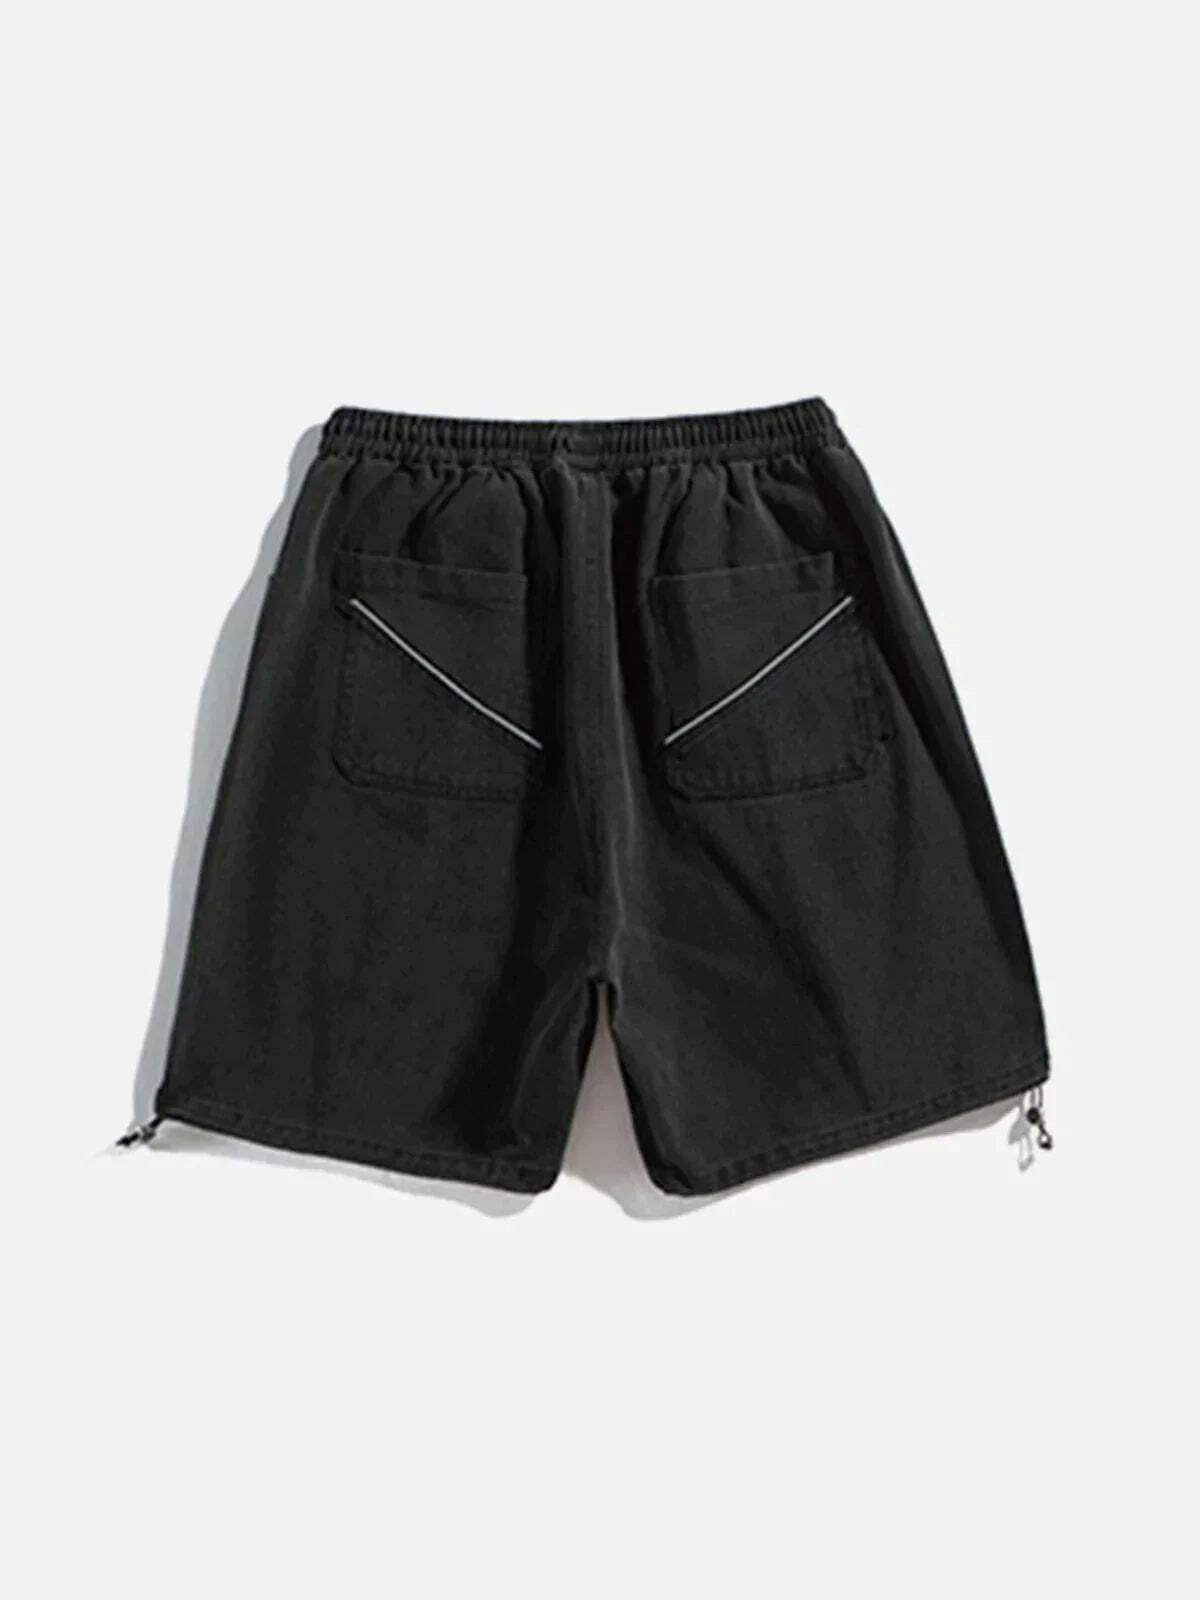 drawstring label shorts edgy urban streetwear 2684